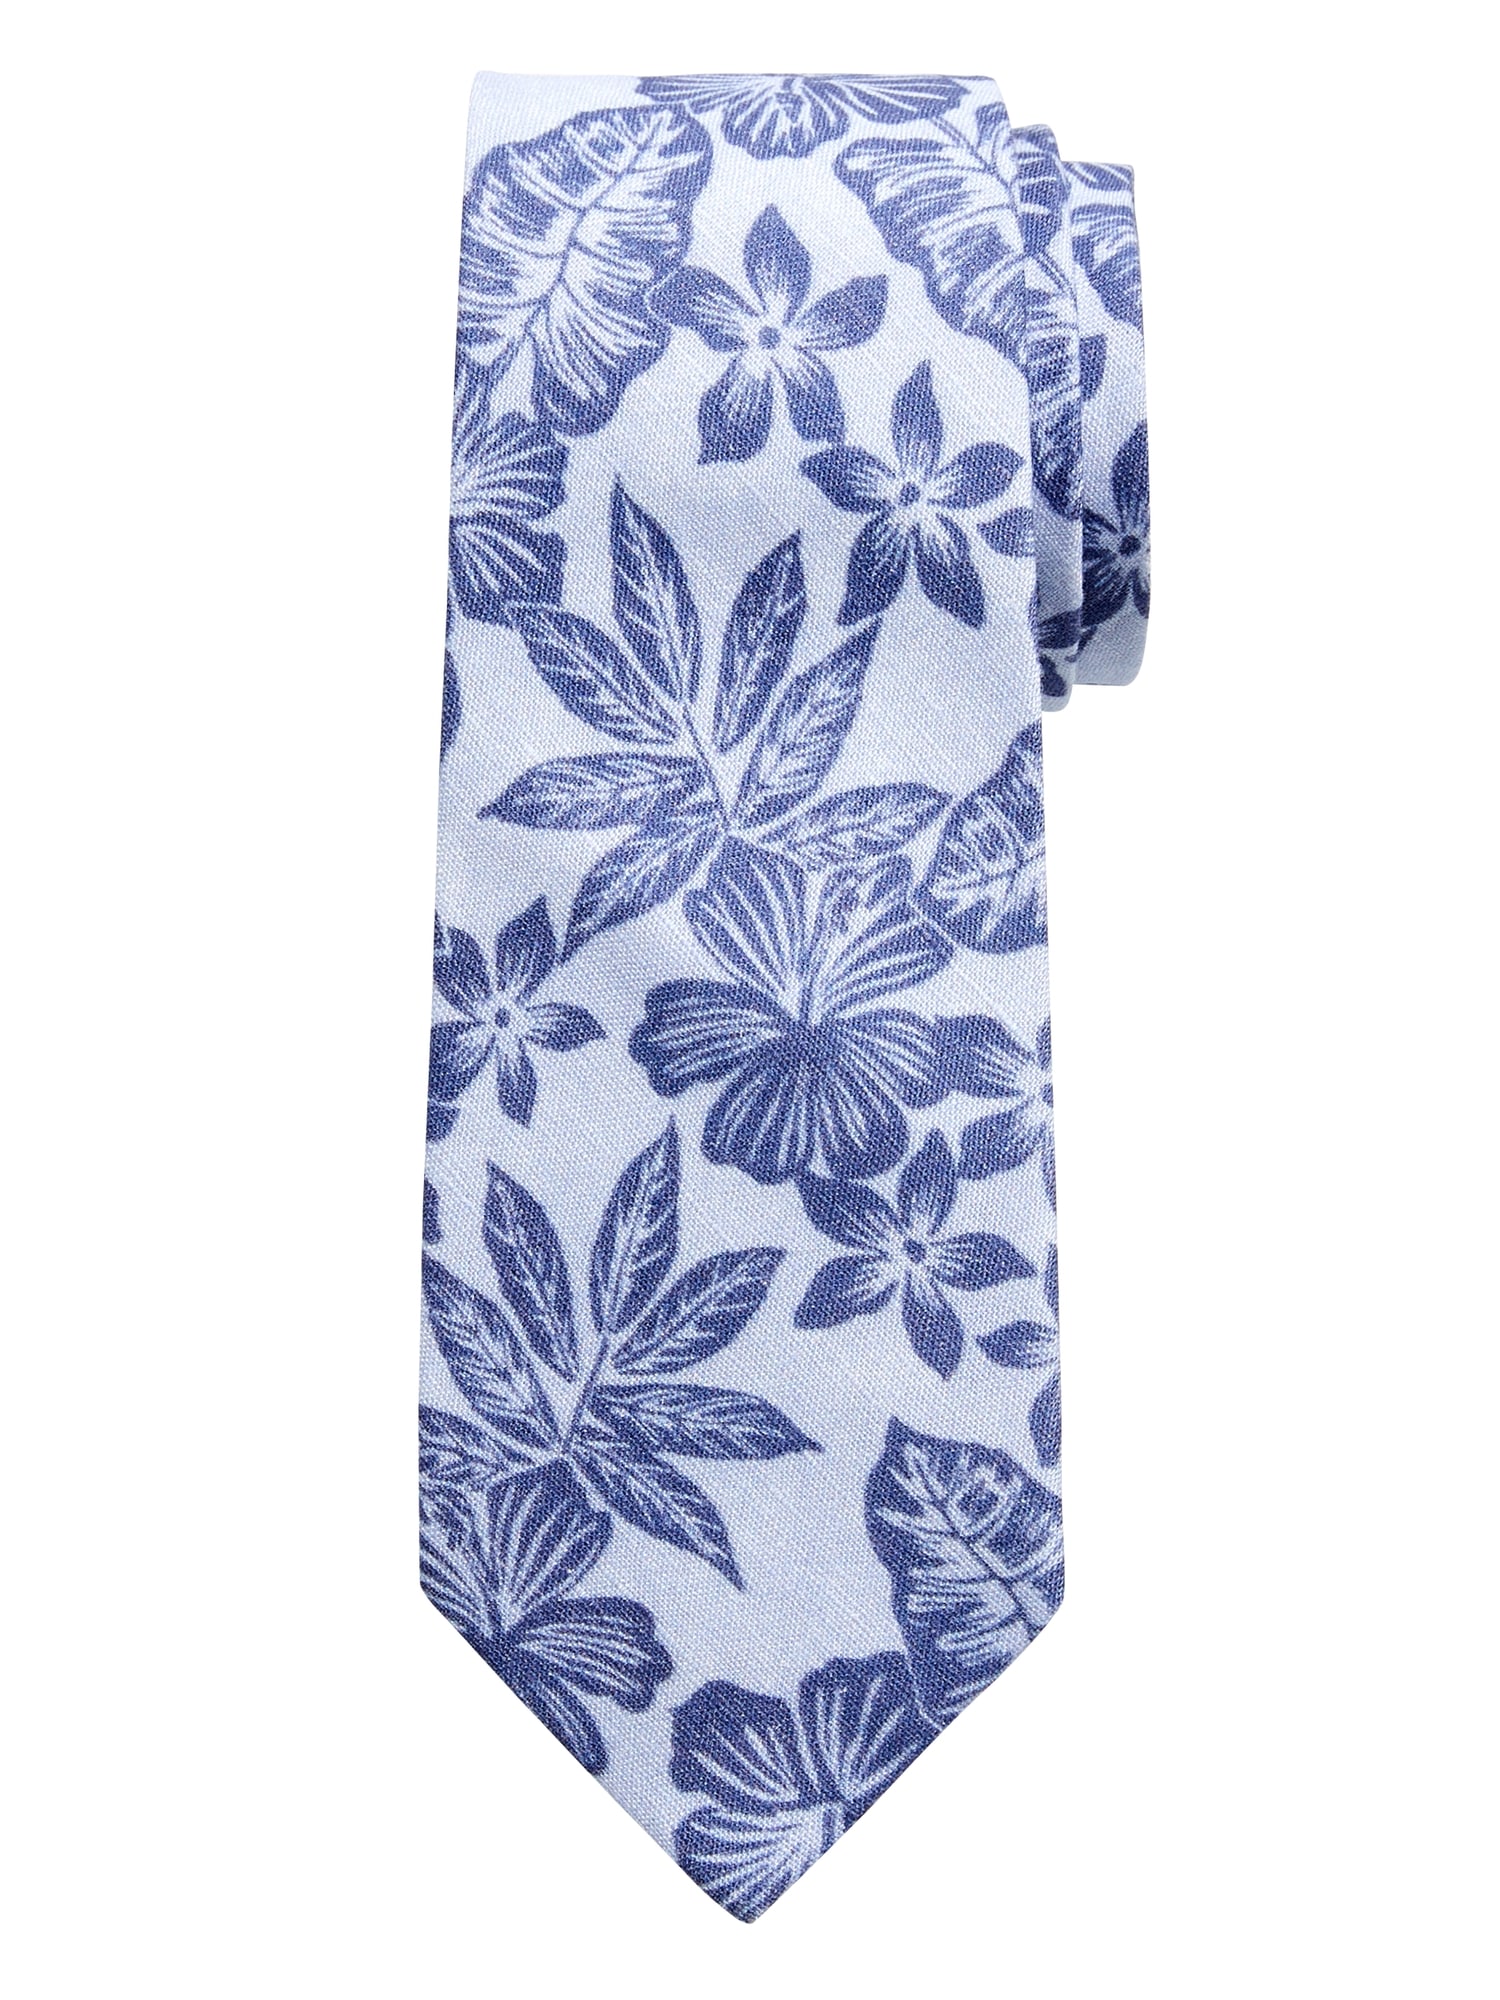 Vintage Aloha Floral Tie